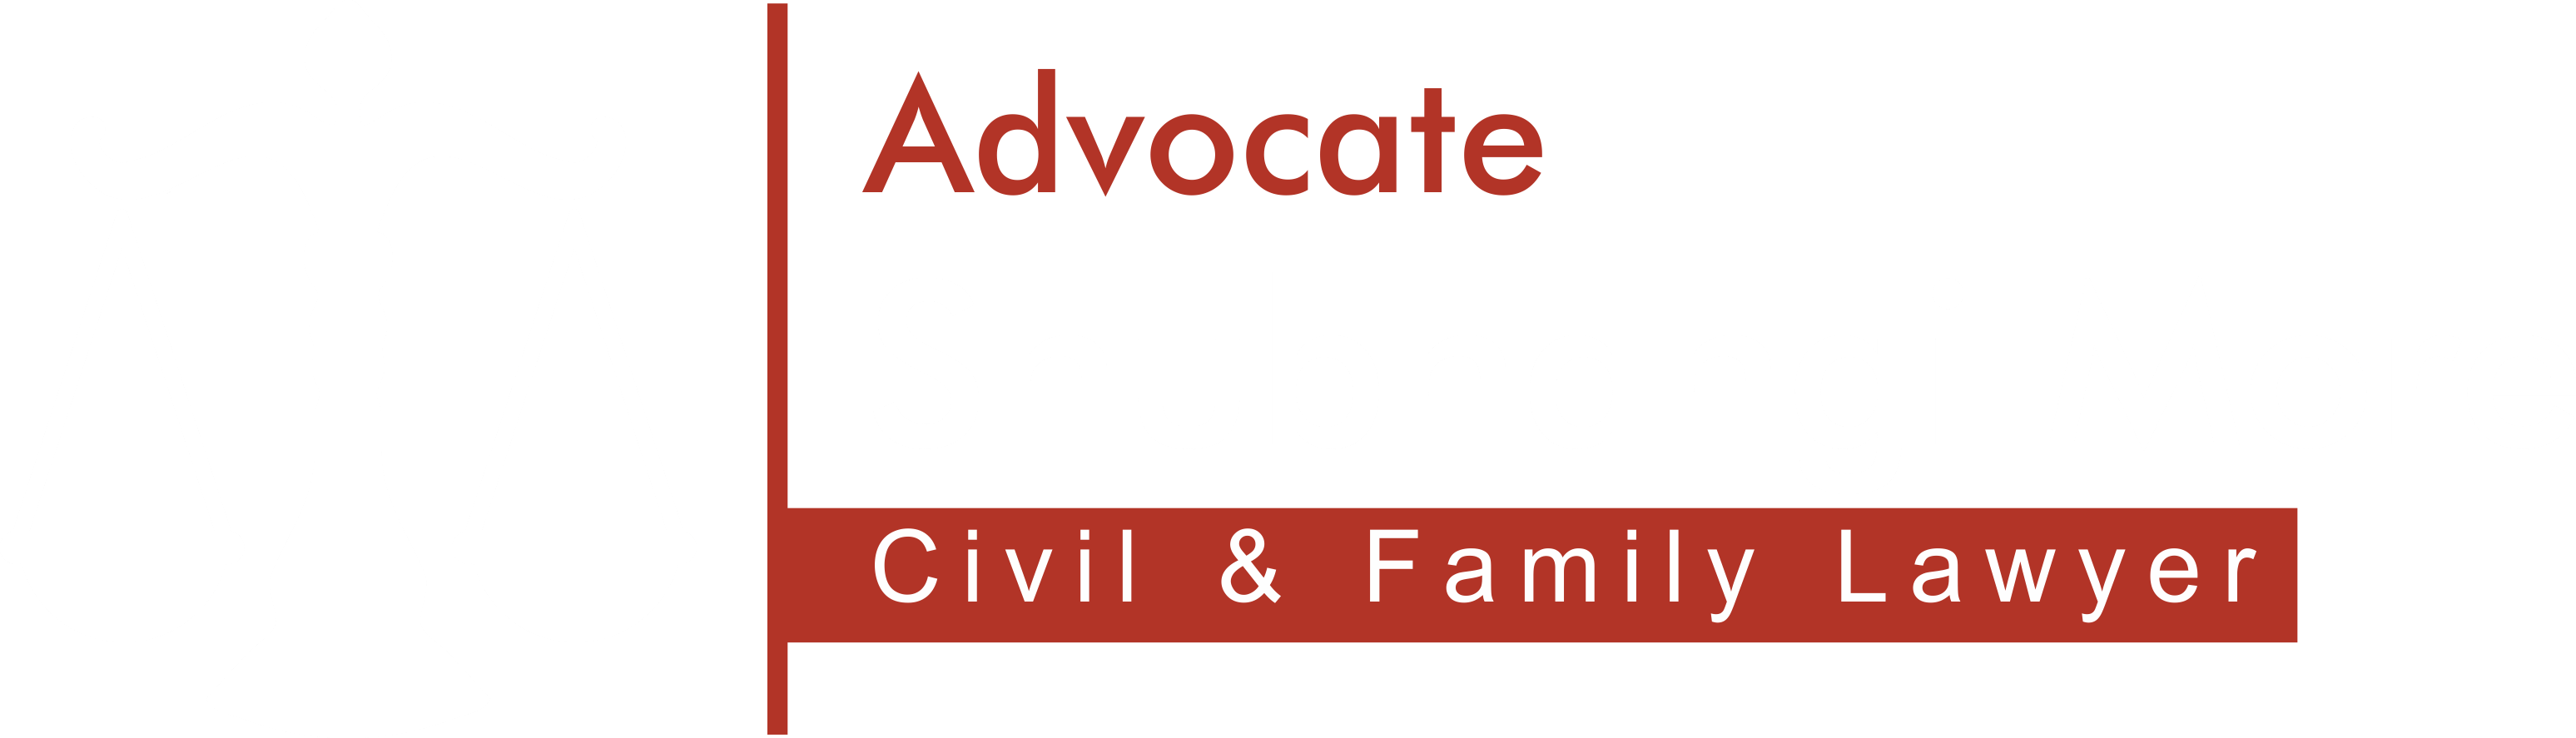 Advocate Shubhangi More